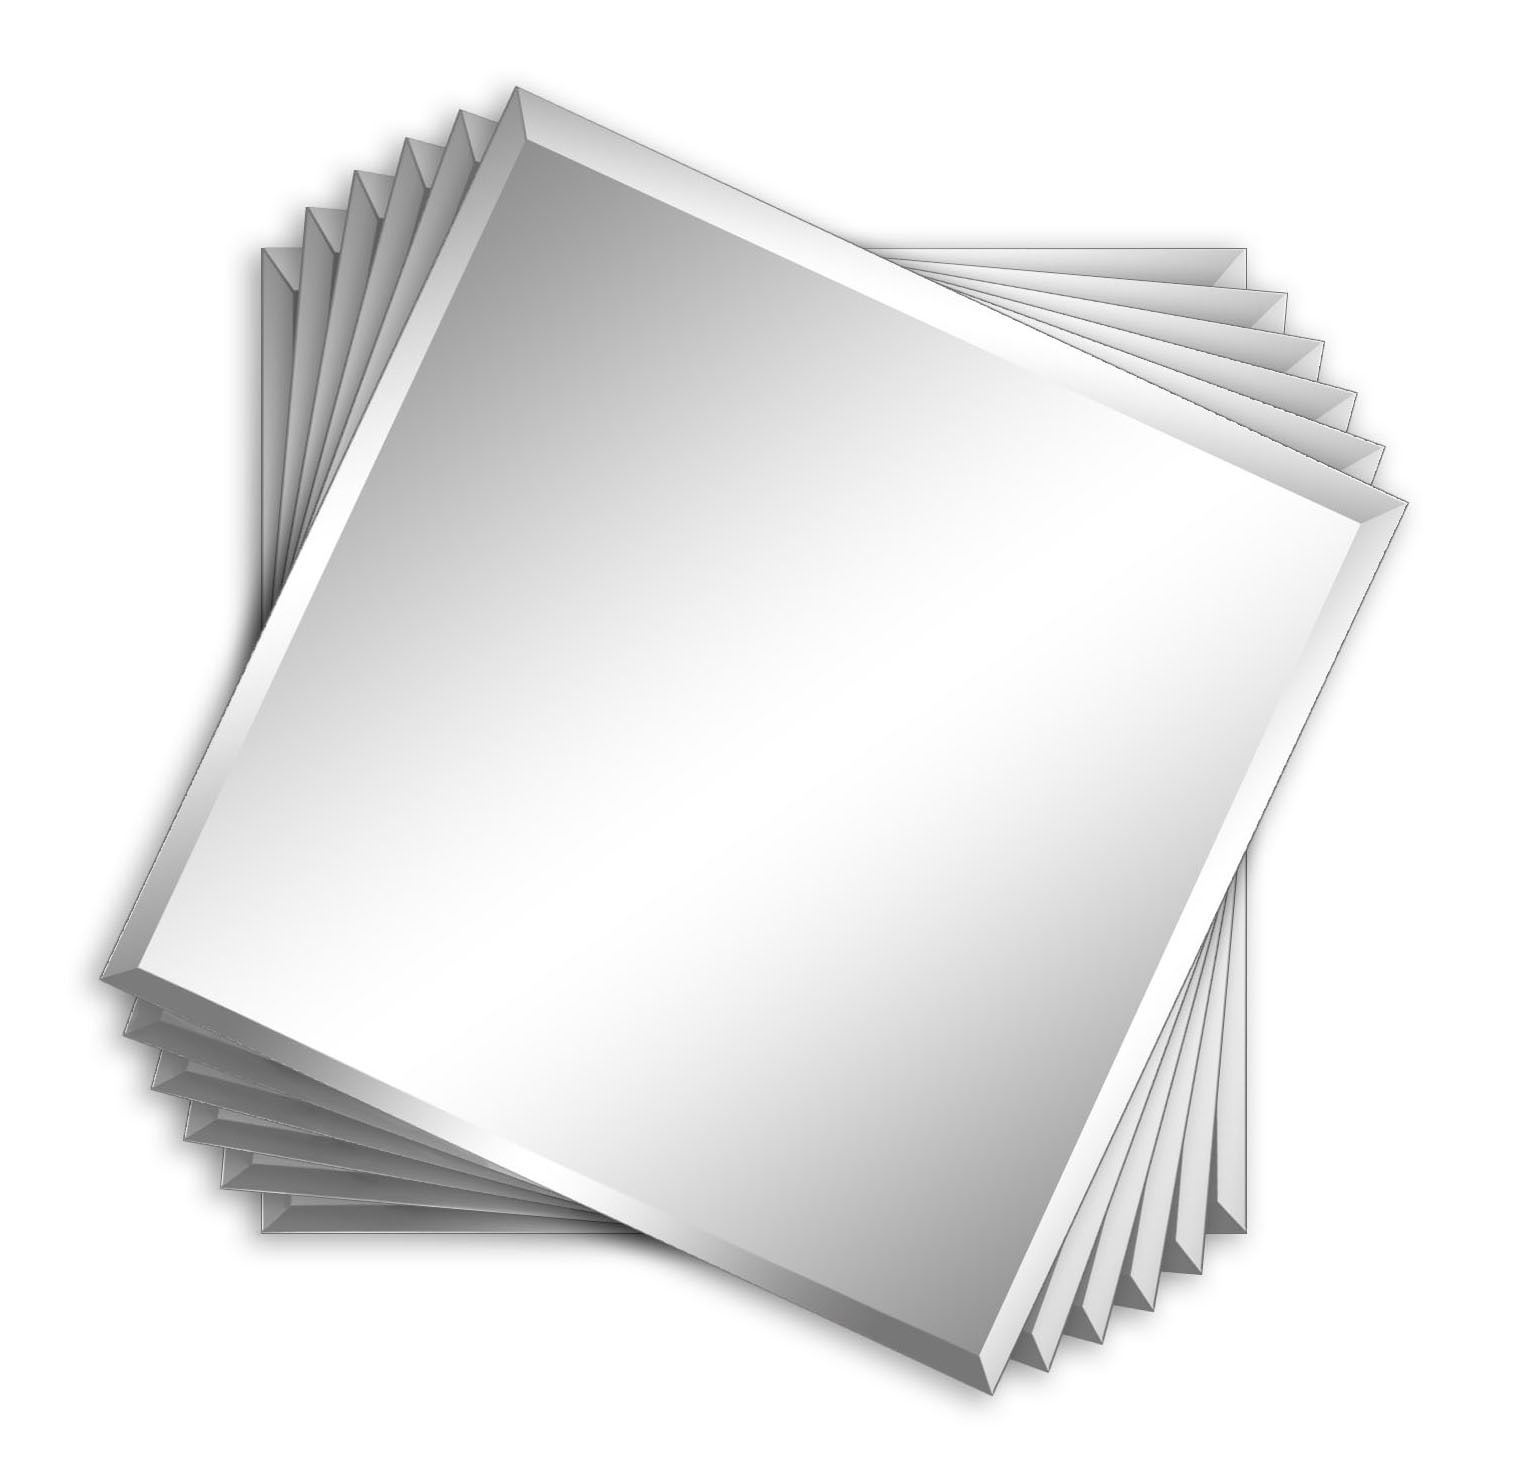 H Square Beveled Frameless Wall Mirror, Square Bevelled Edge Mirror Tiles 6 Pack